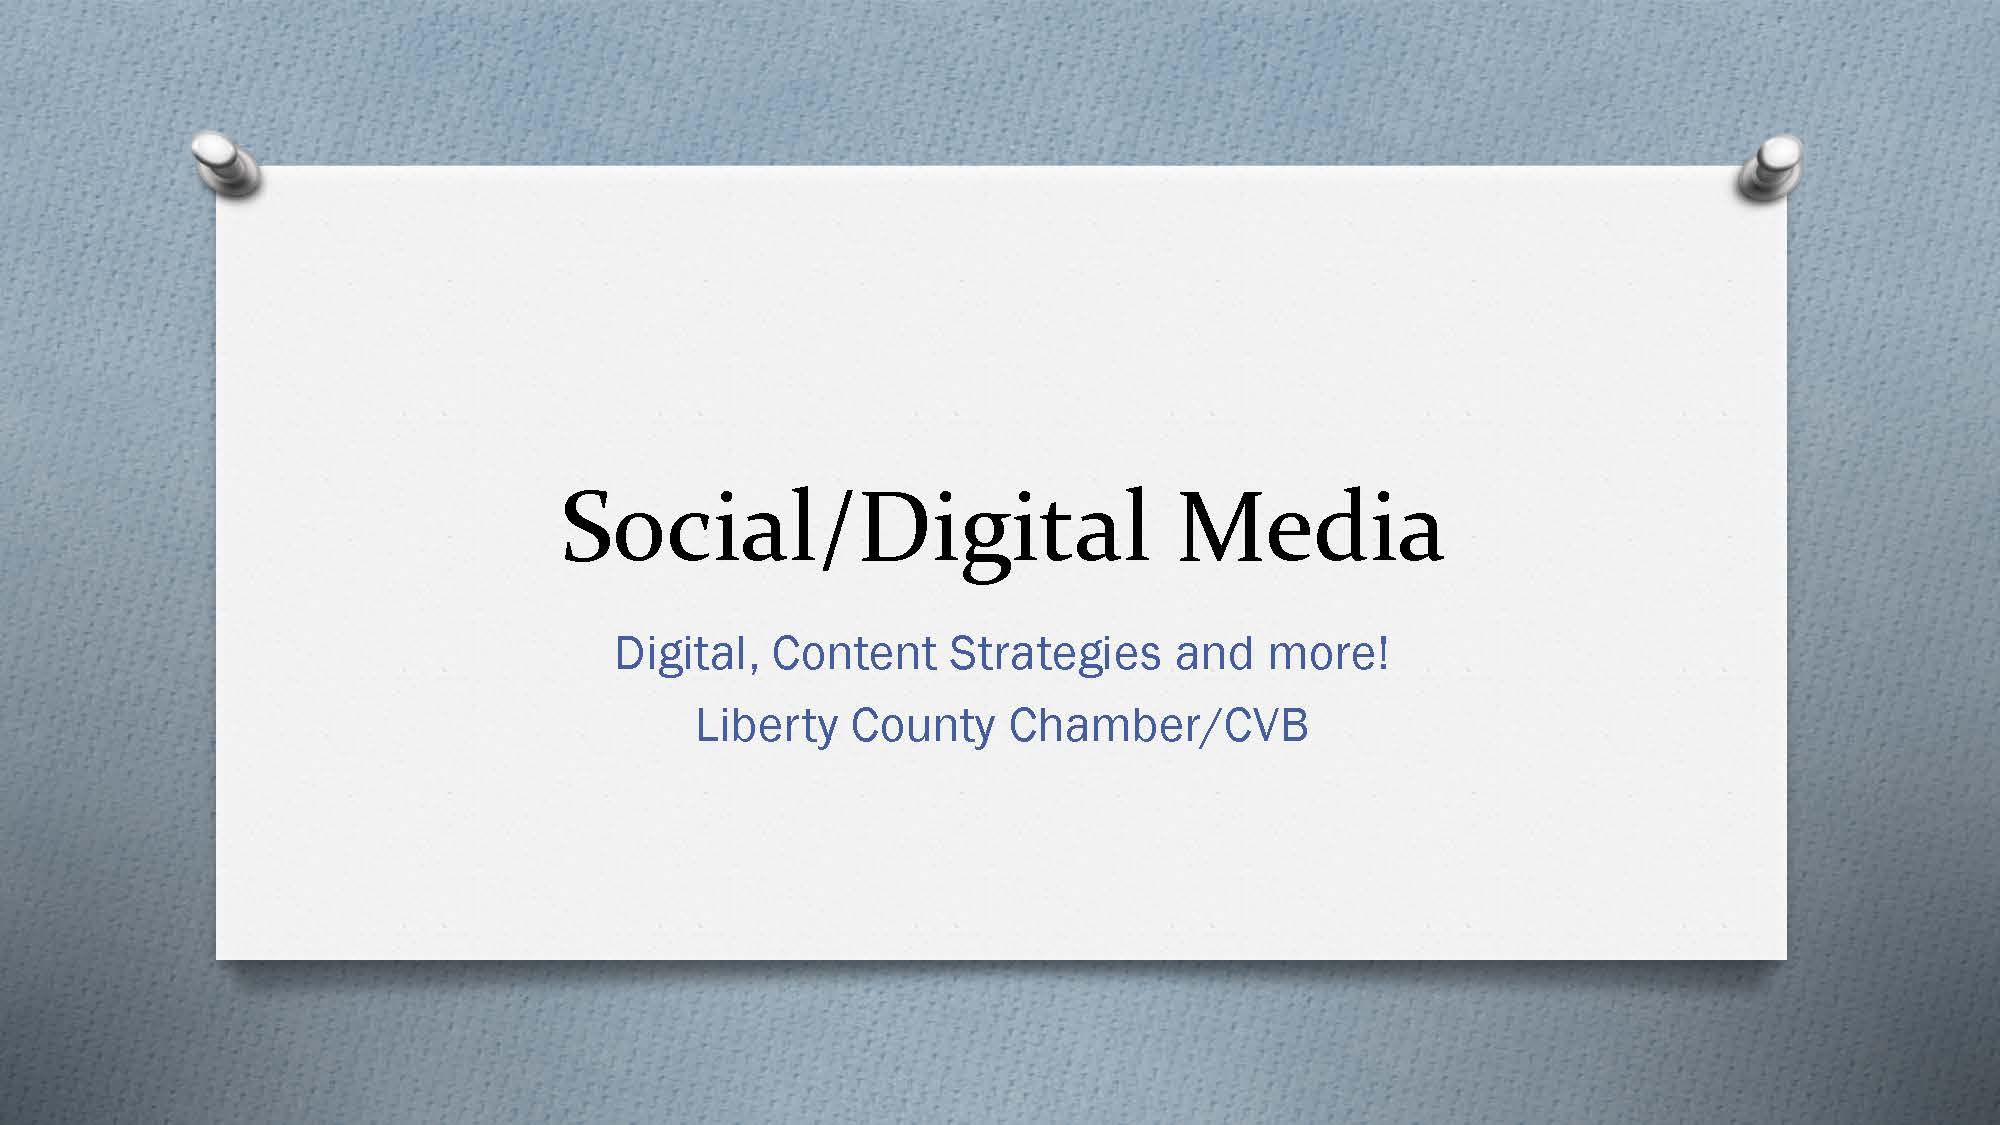 Social/Digital Media Workshop